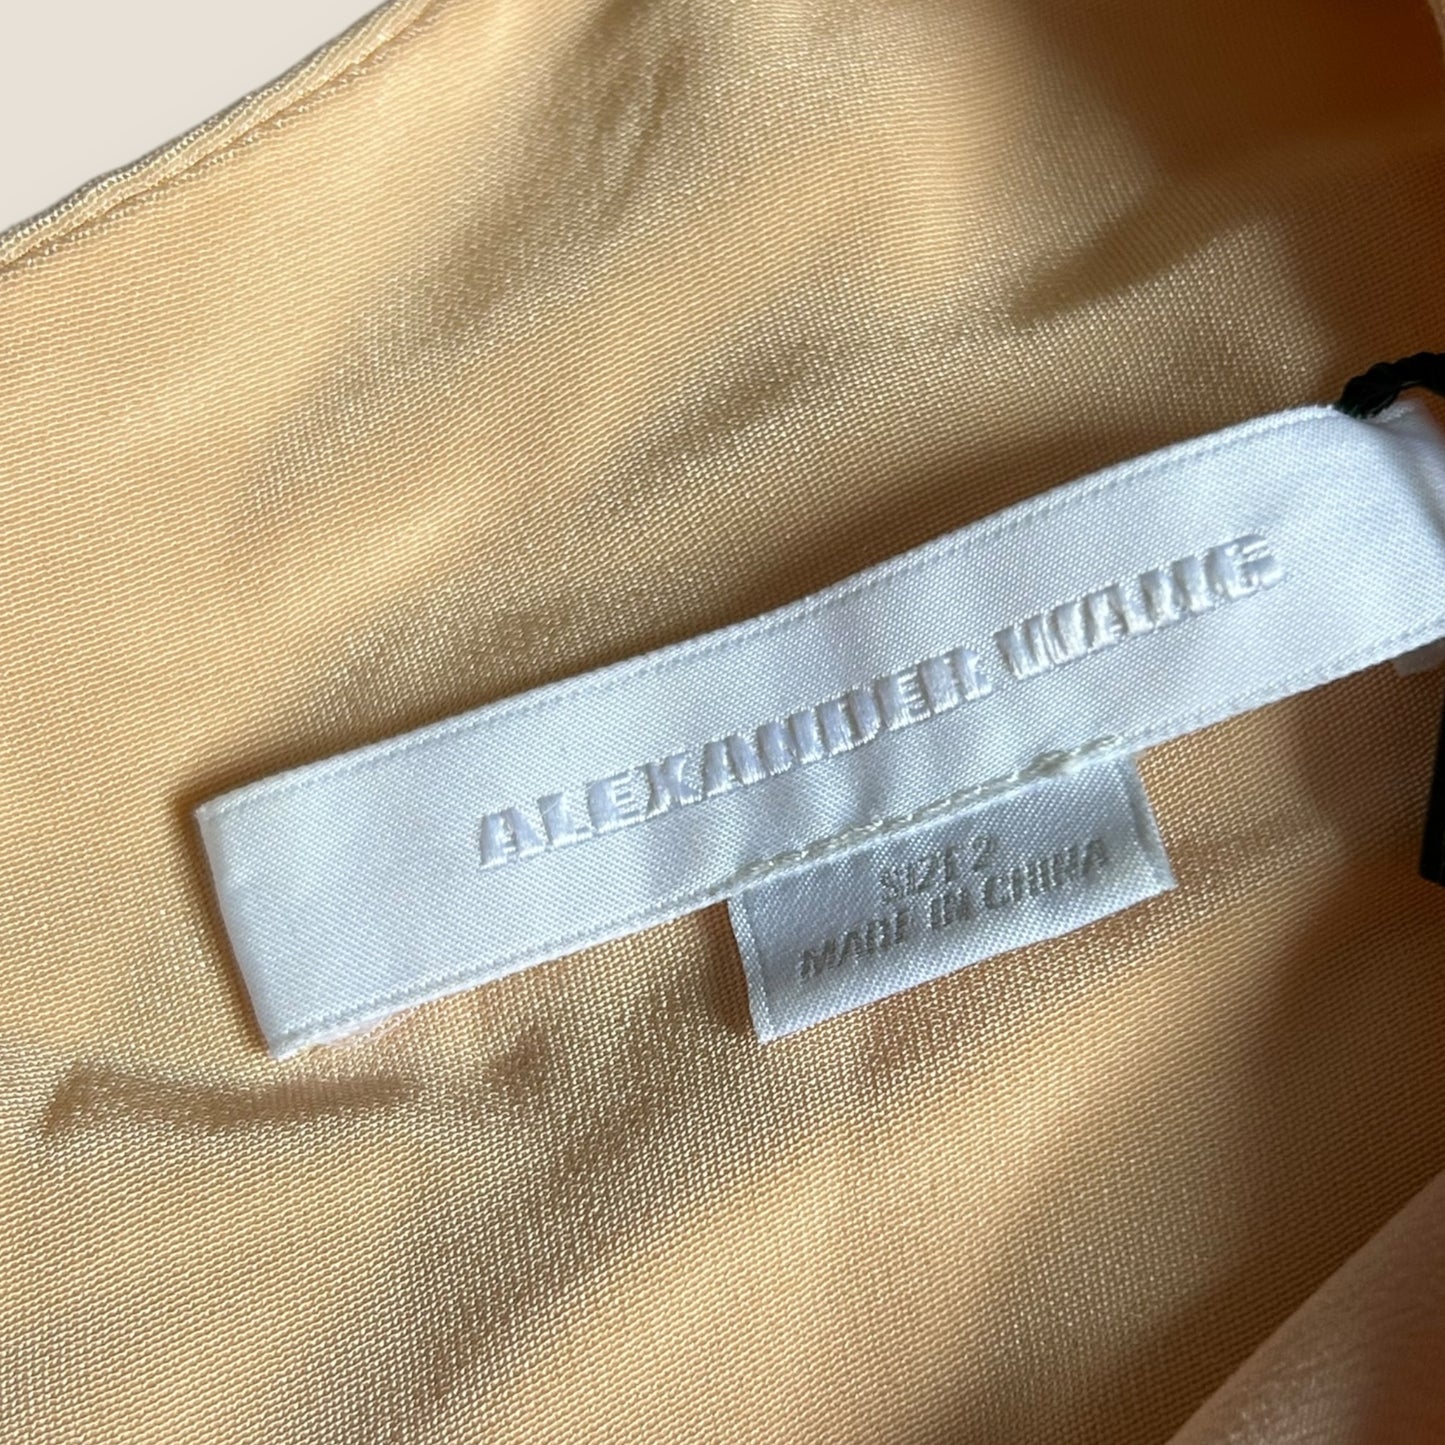 Alexander Wang peach silk midi dress with open back/ S